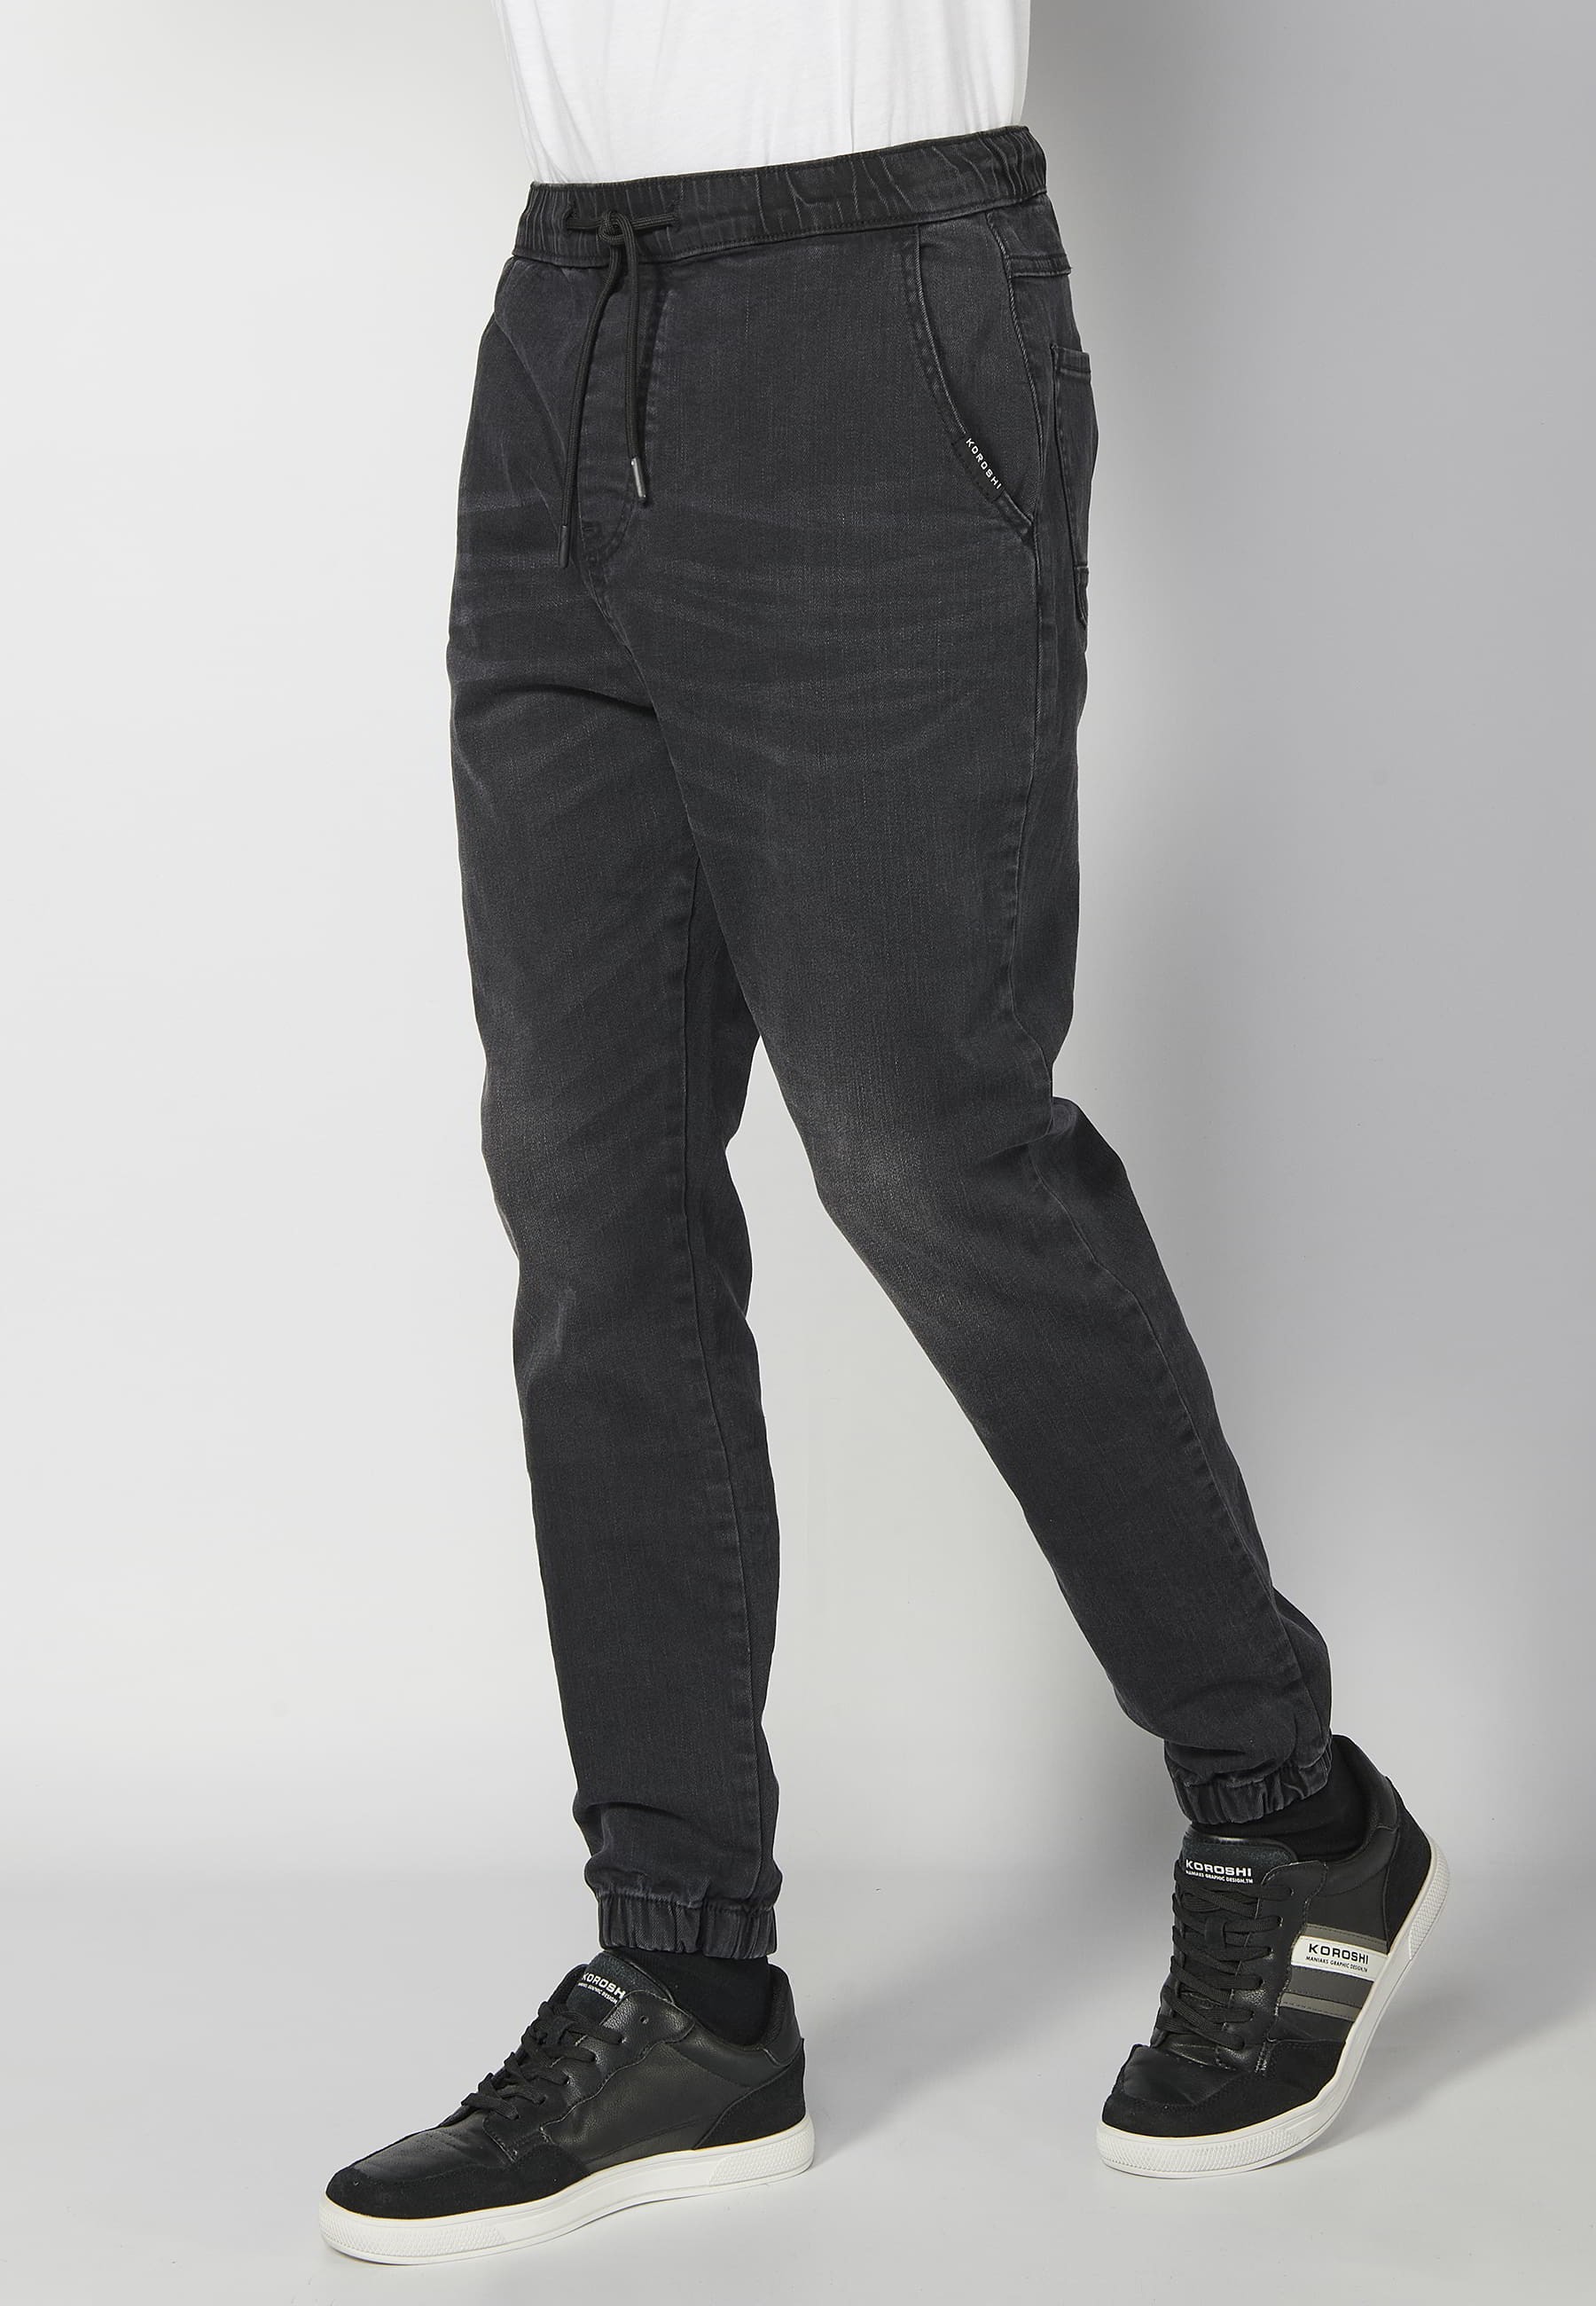 Black elastic waist long jogger pants for Men 6